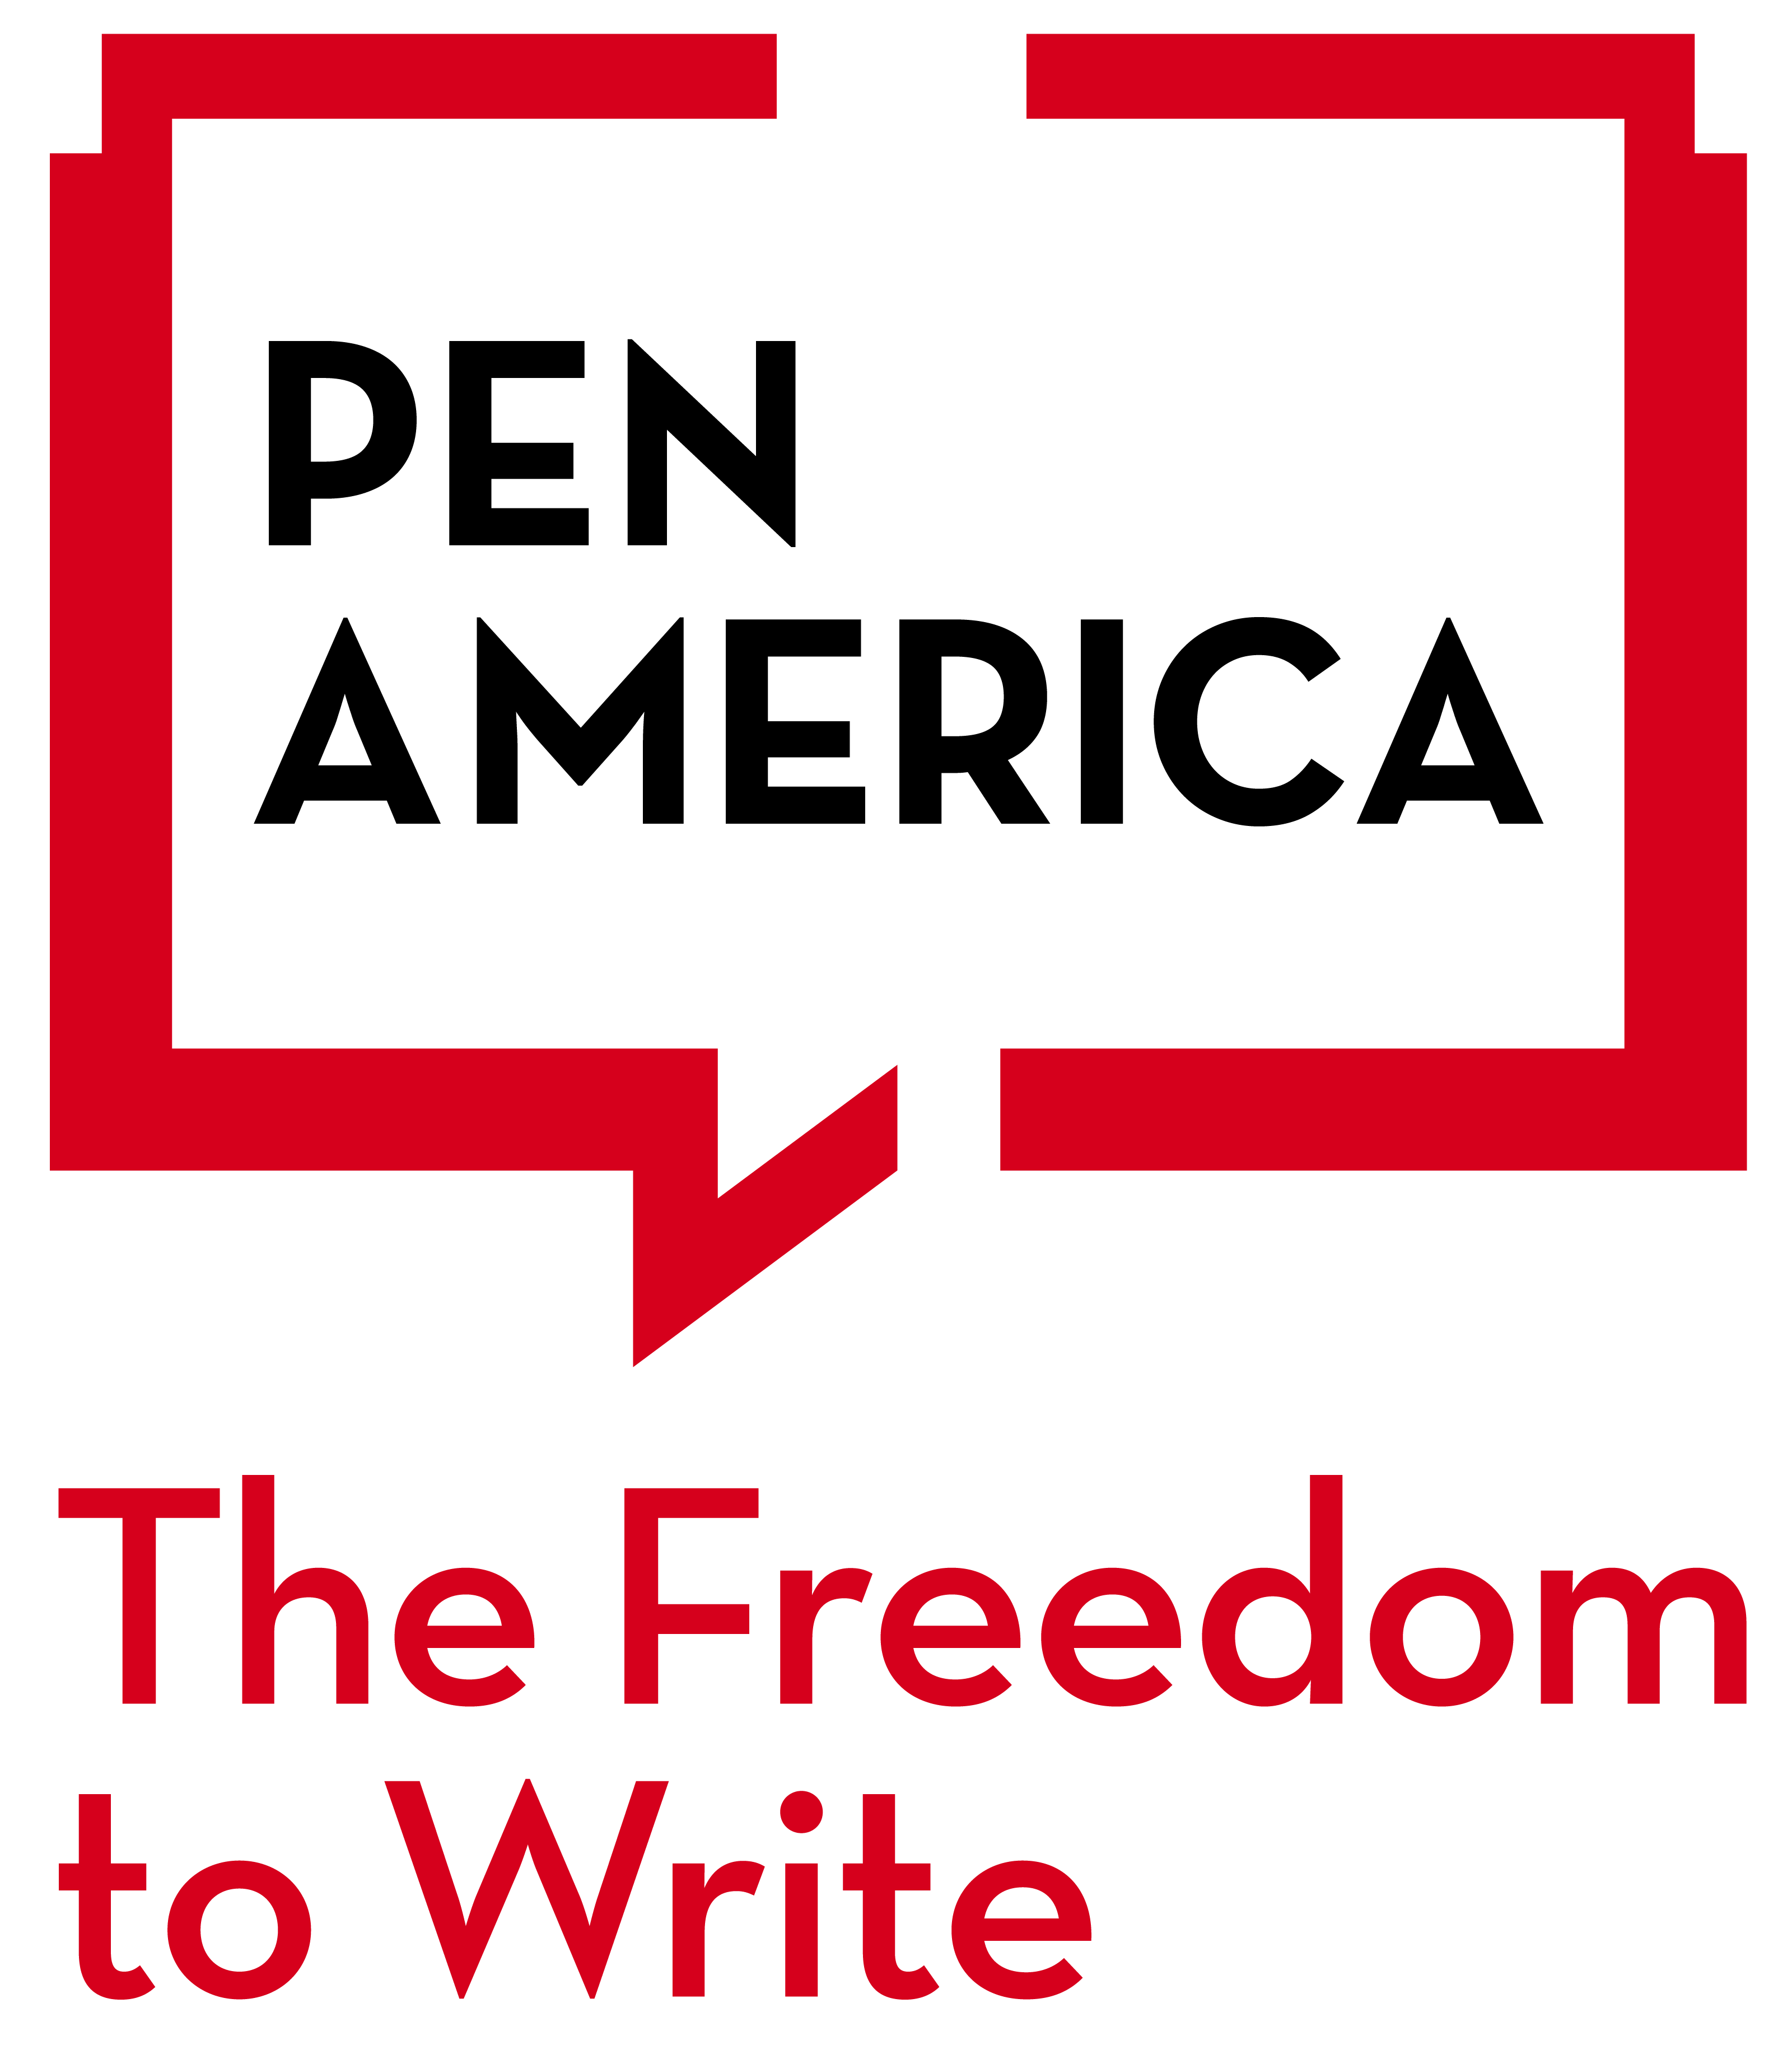 pen-america